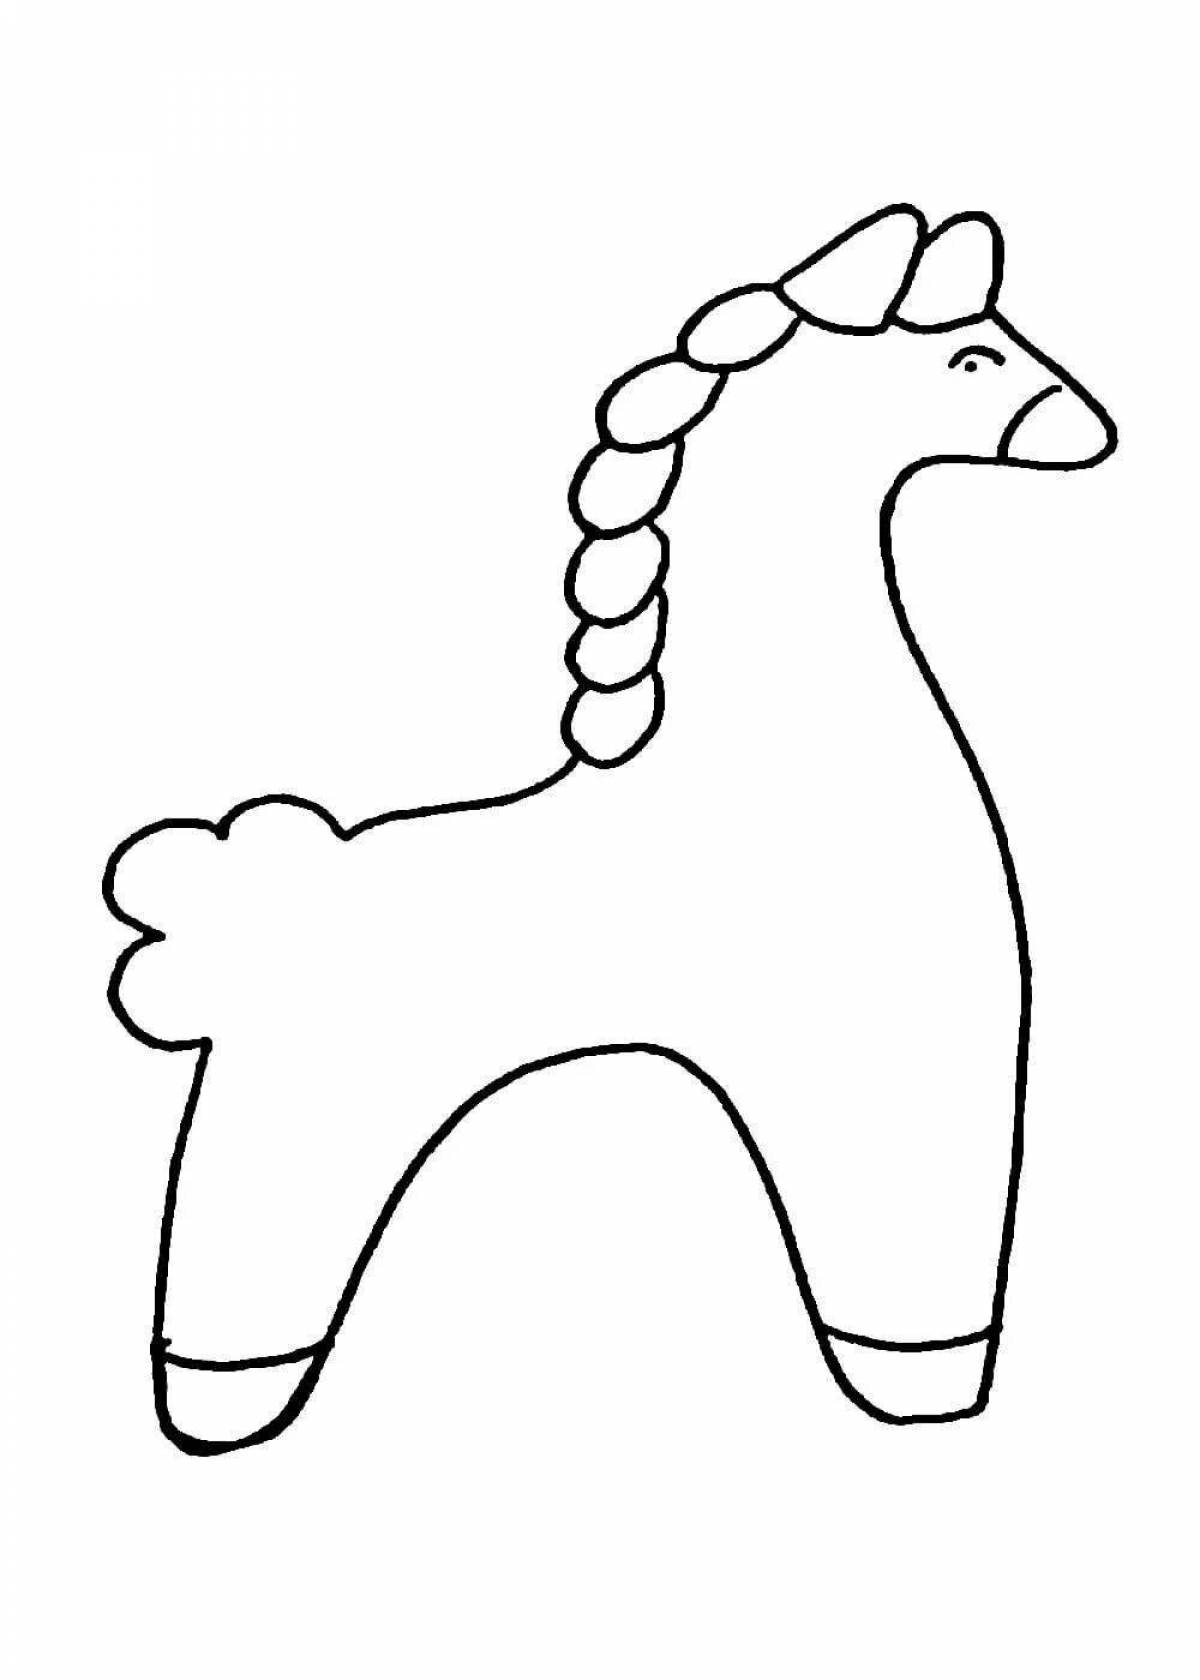 Красочная дымковская лошадь раскраска для детей